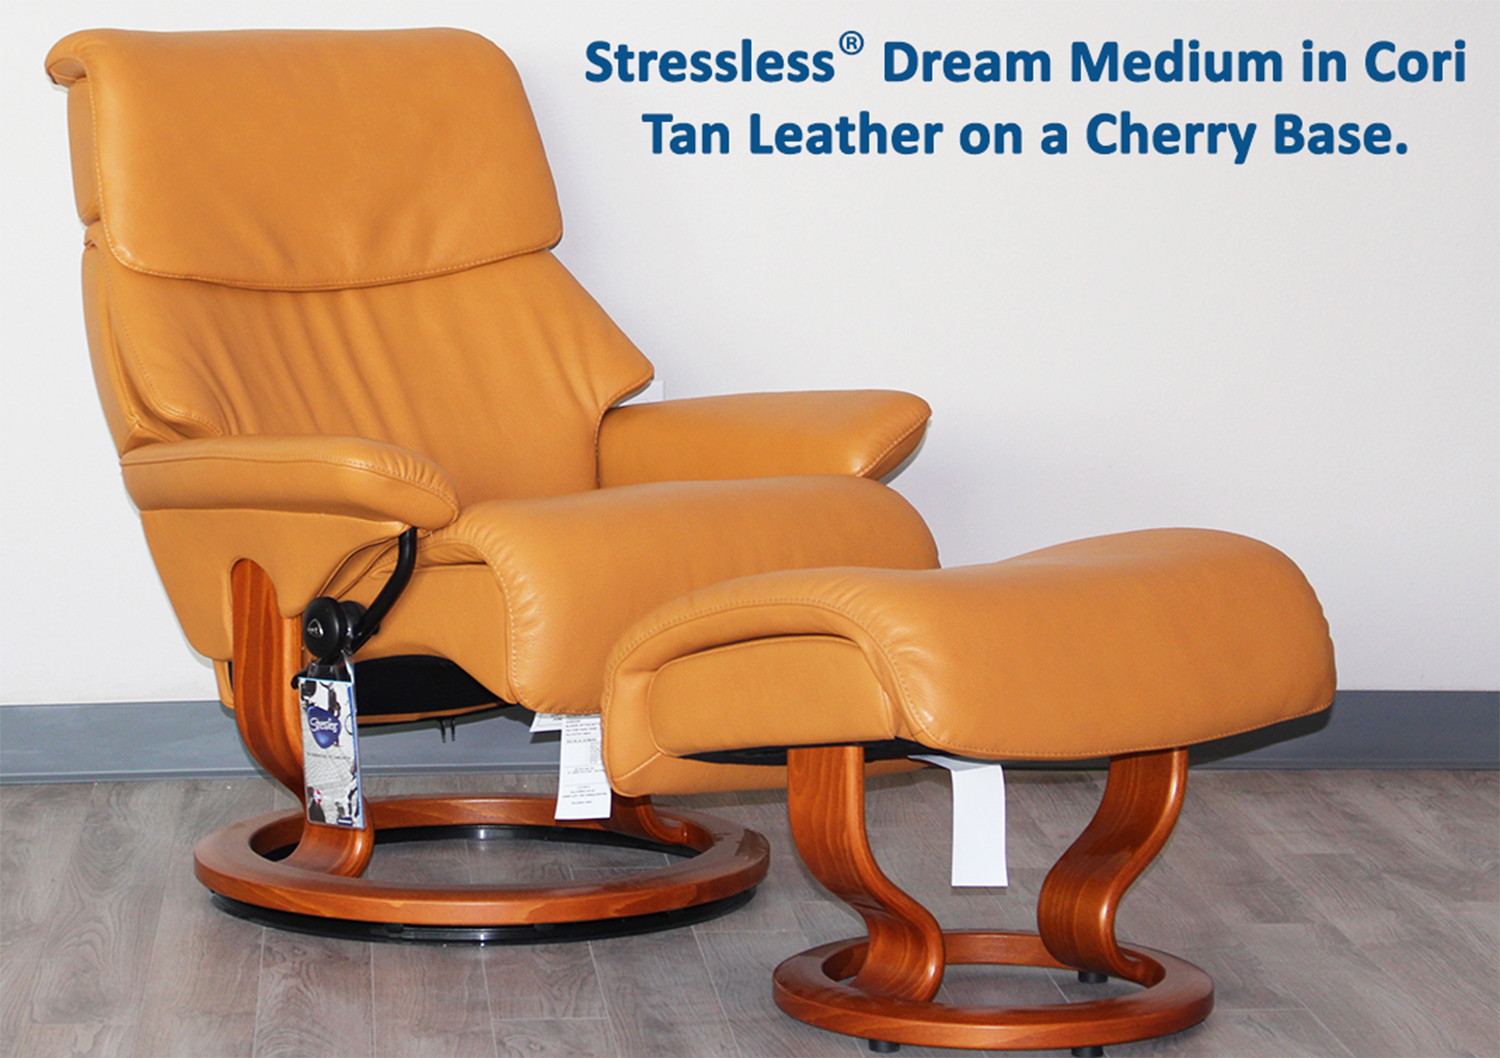 Stressless Dream Medium Cori Tan Leather by Ekornes - Stressless Dream  Medium Cori Tan Leather Chairs Recliners